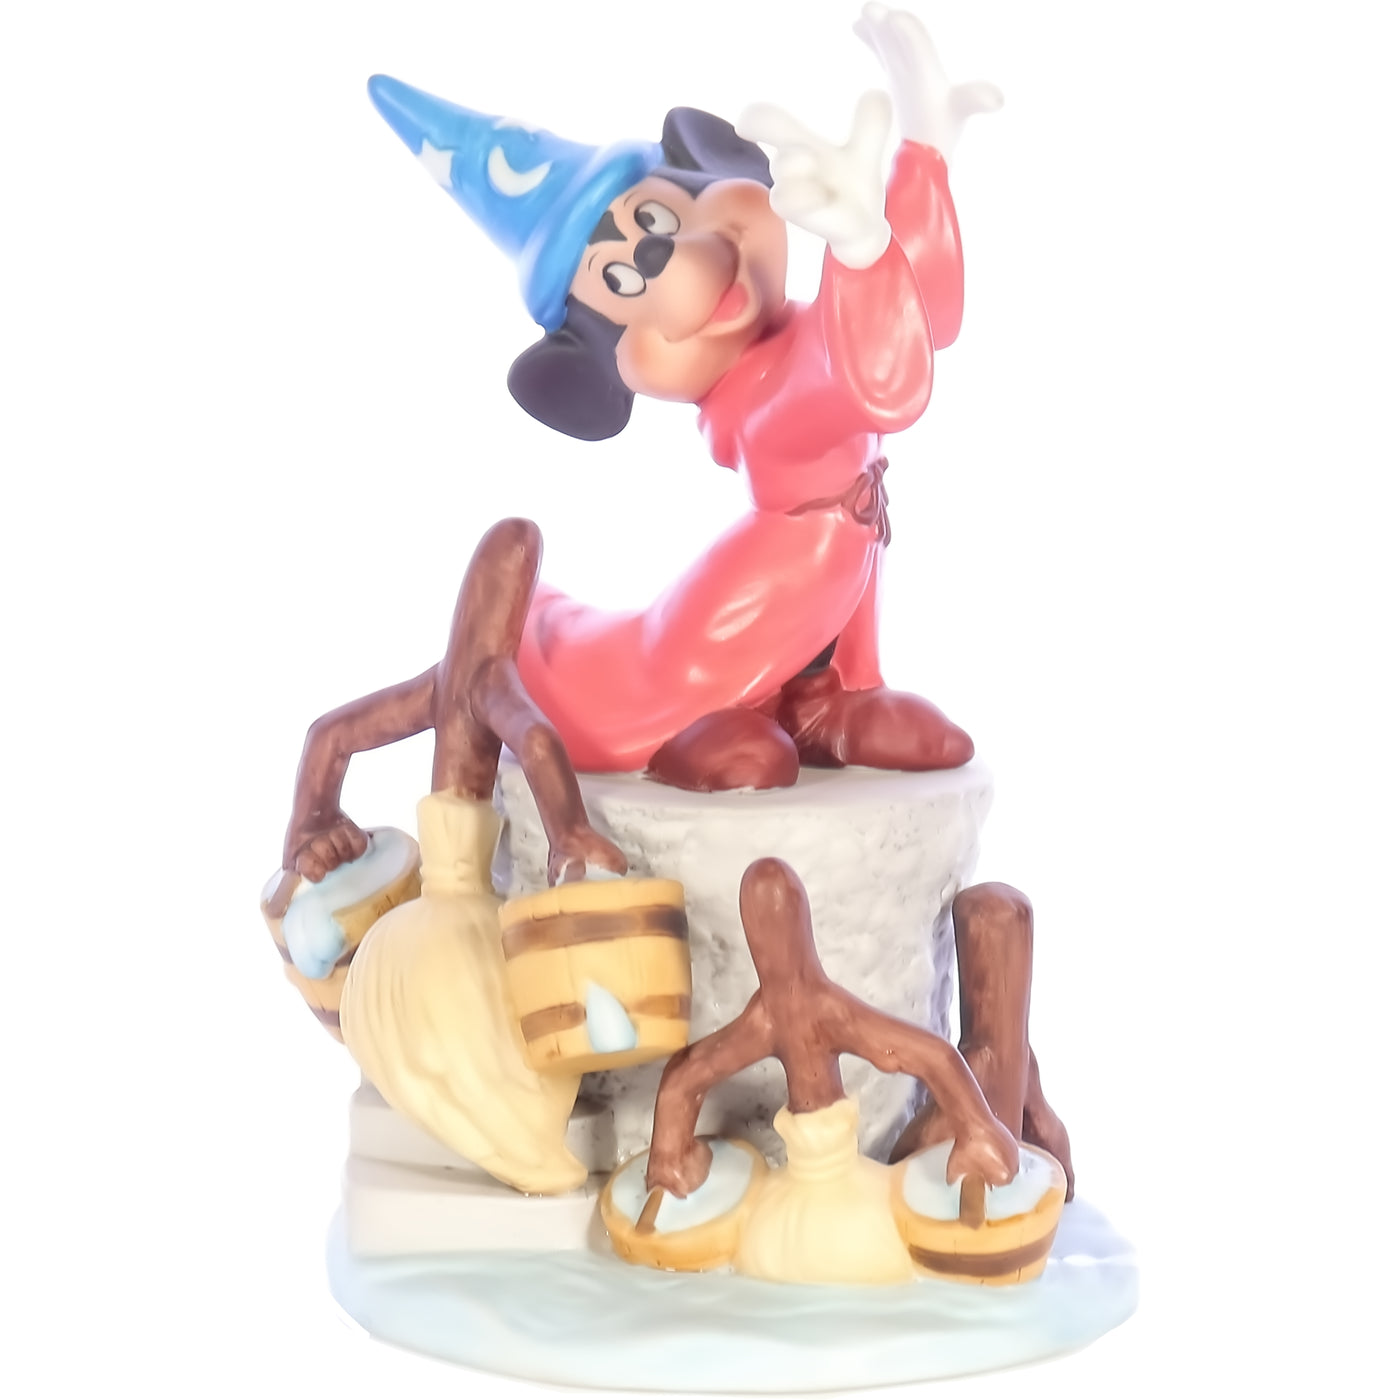 Disney's Magic Memories Porcelain Figurine Limited Edition Fantasia 1980 6.75"